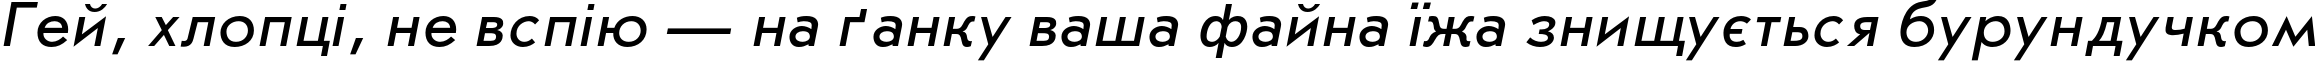 Пример написания шрифтом JournalSansC Italic текста на украинском